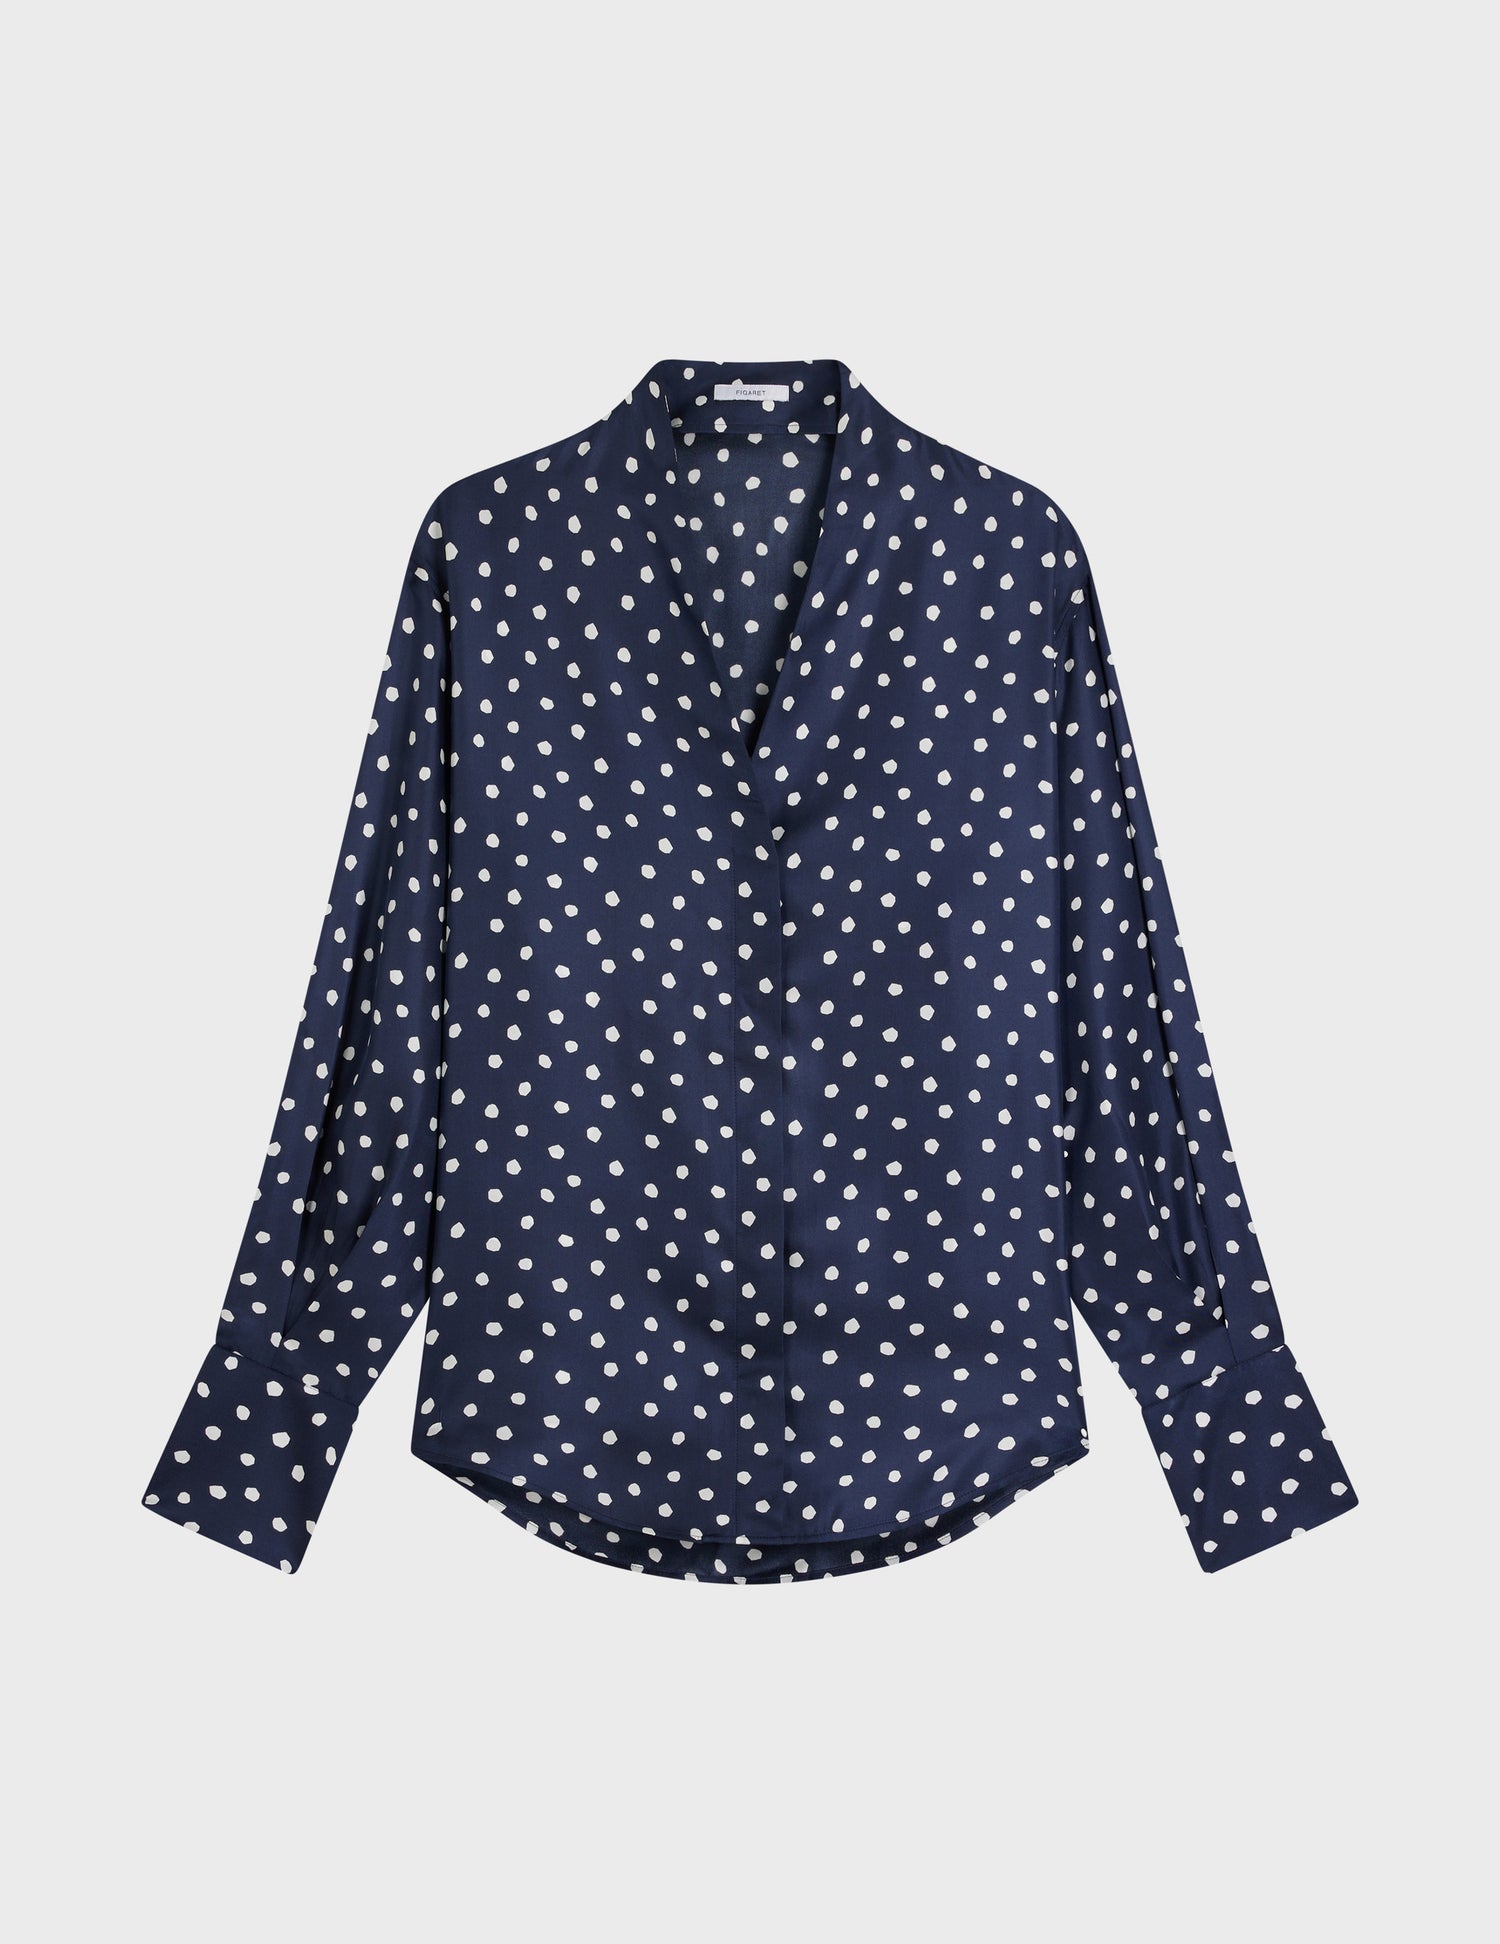 Ilena Hidden button placket navy blue shirt - Twill - Rising shawl Collar#4